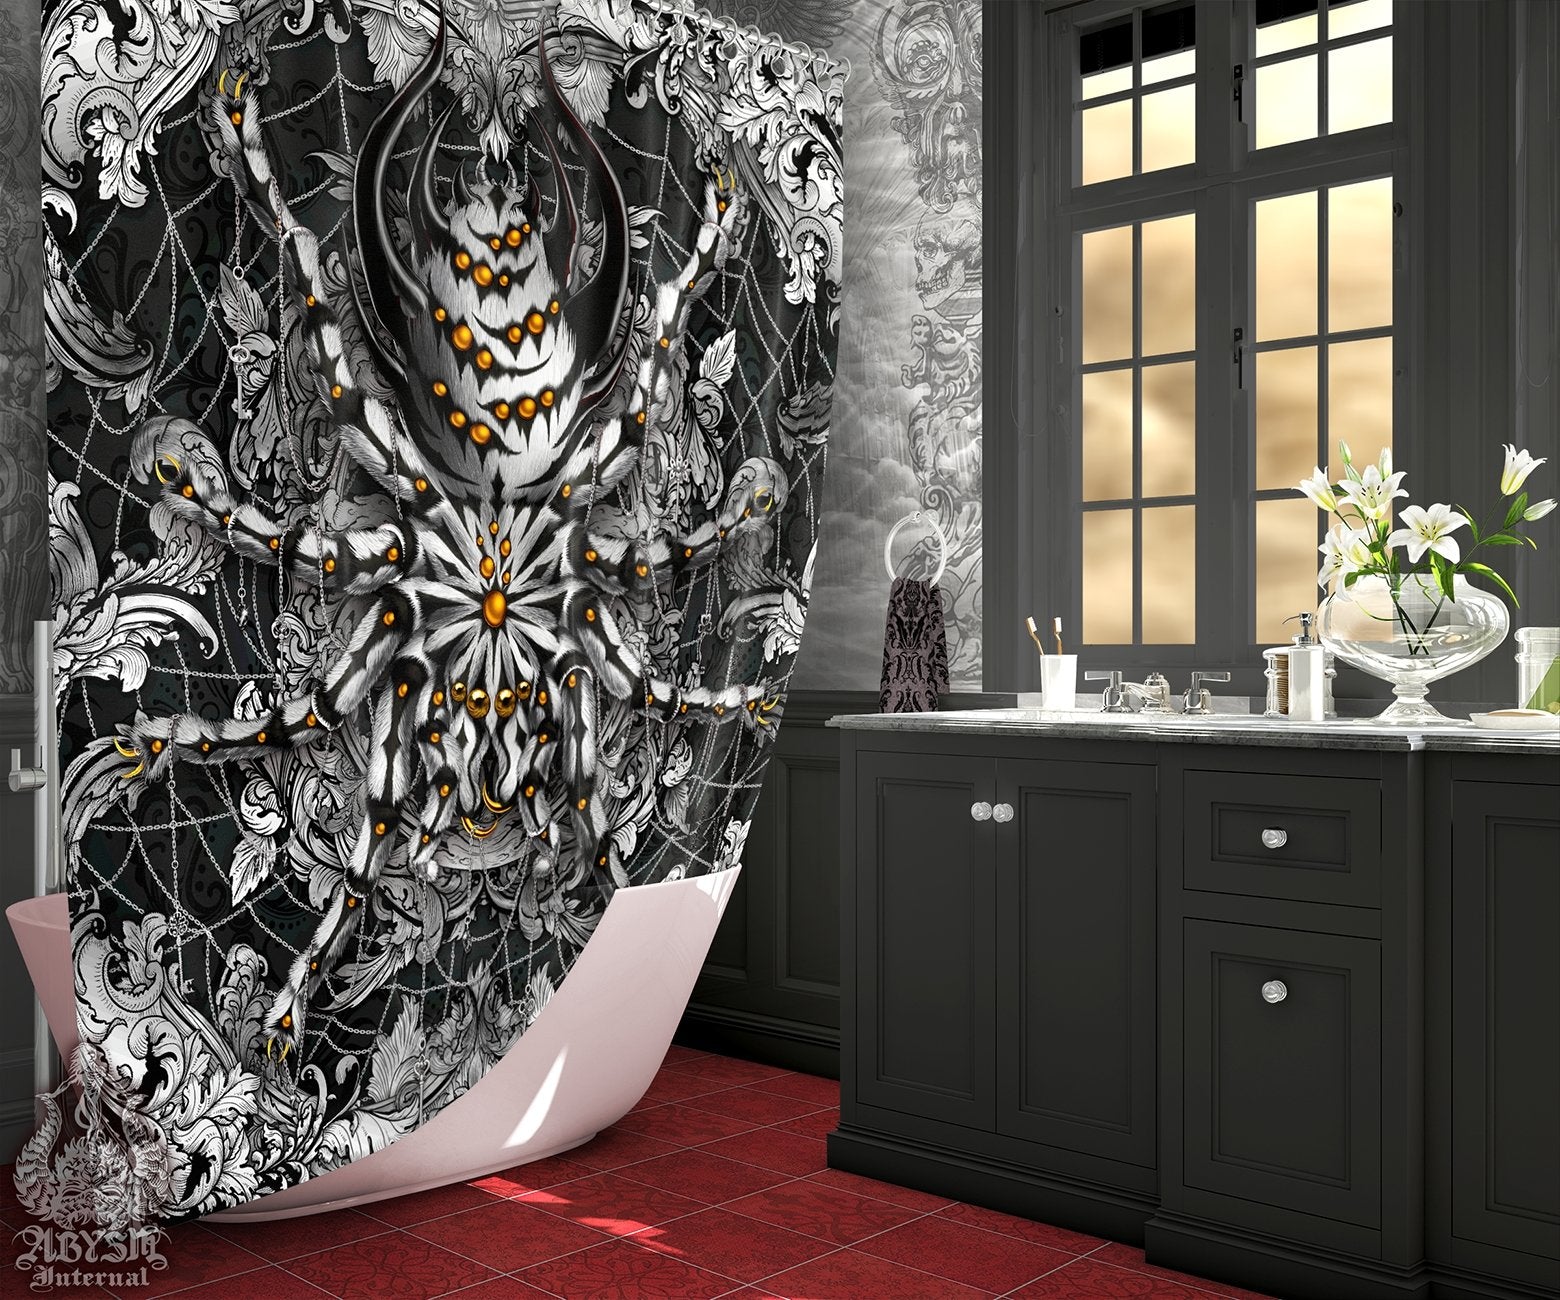 Silver Spider Shower Curtain, Indie Bathroom Decor, Alternative Home - Baroque Black, Tarantula Art - Abysm Internal